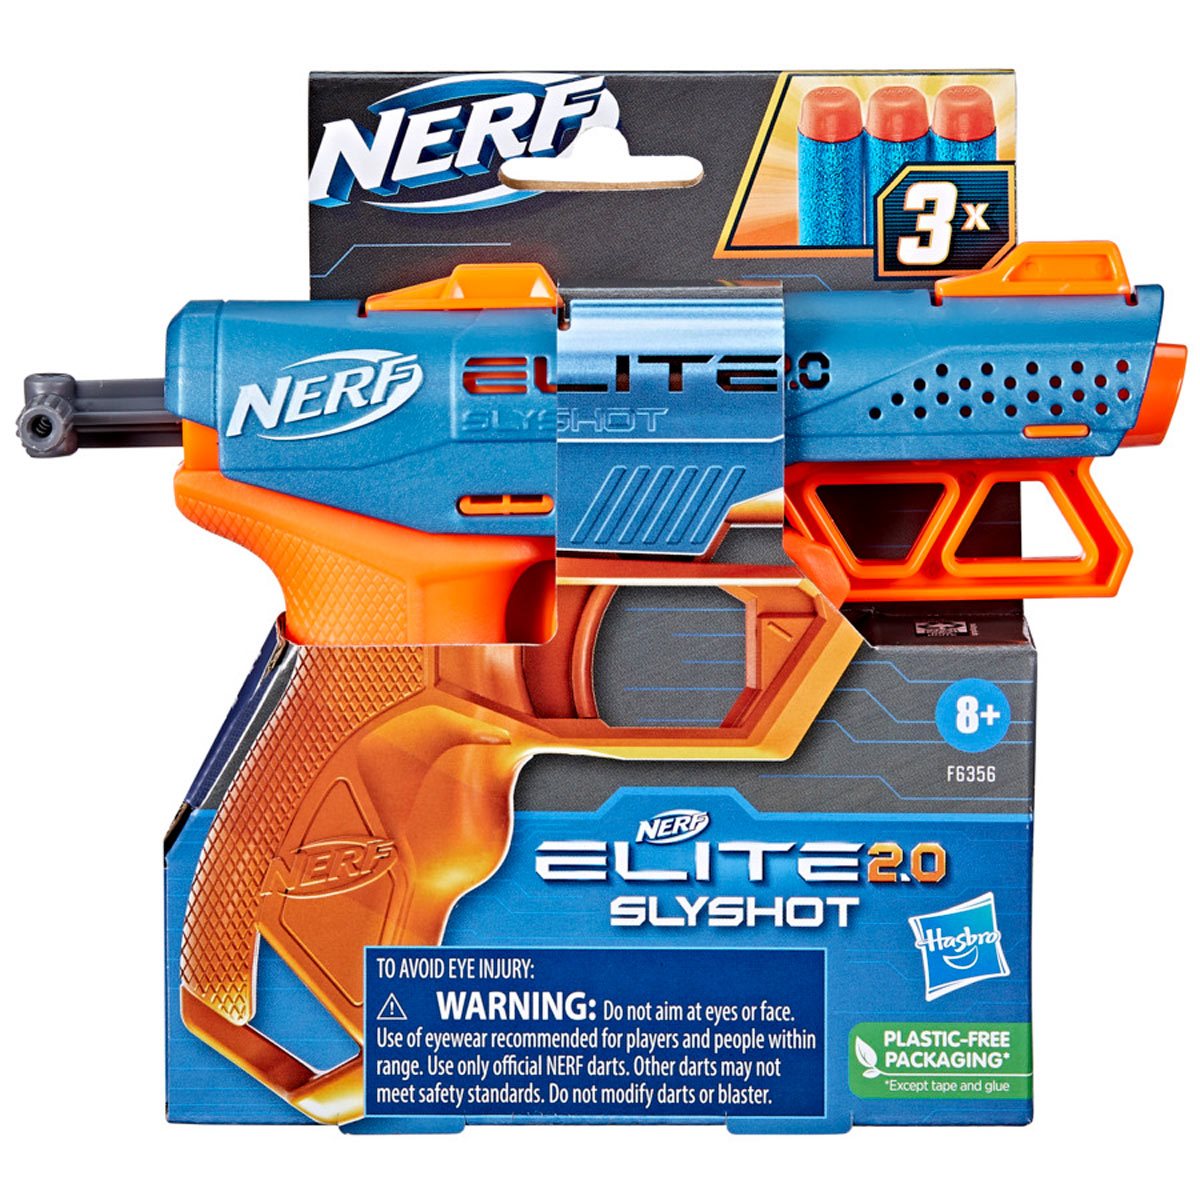 Nerf Elite 2.0 Lock N Load Pack, 1 Nerf Blaster